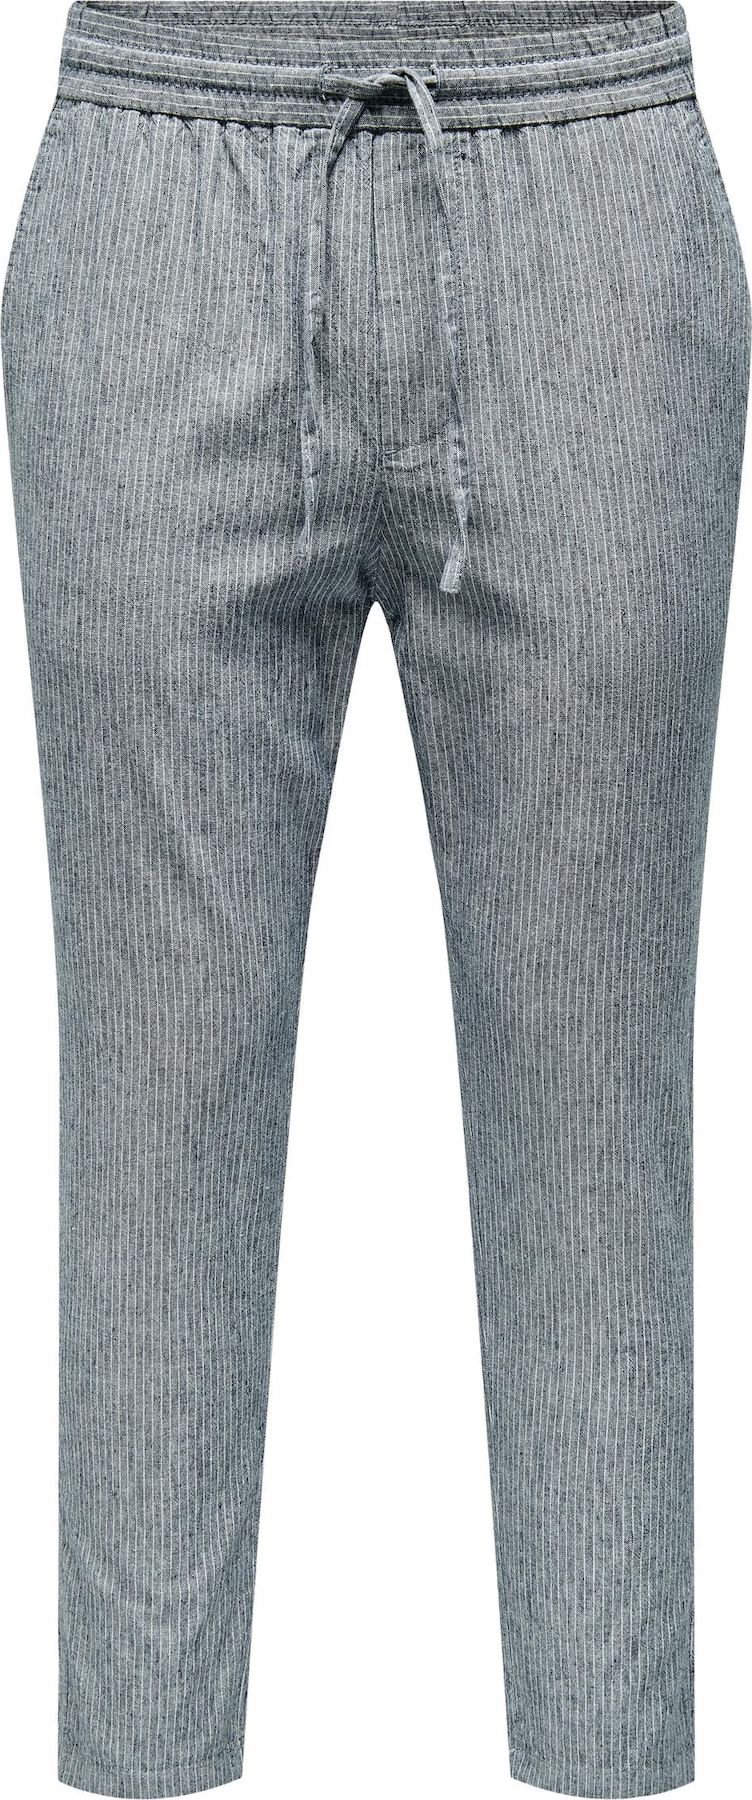 Kalhoty 'Linus' Only & Sons chladná modrá / bílá